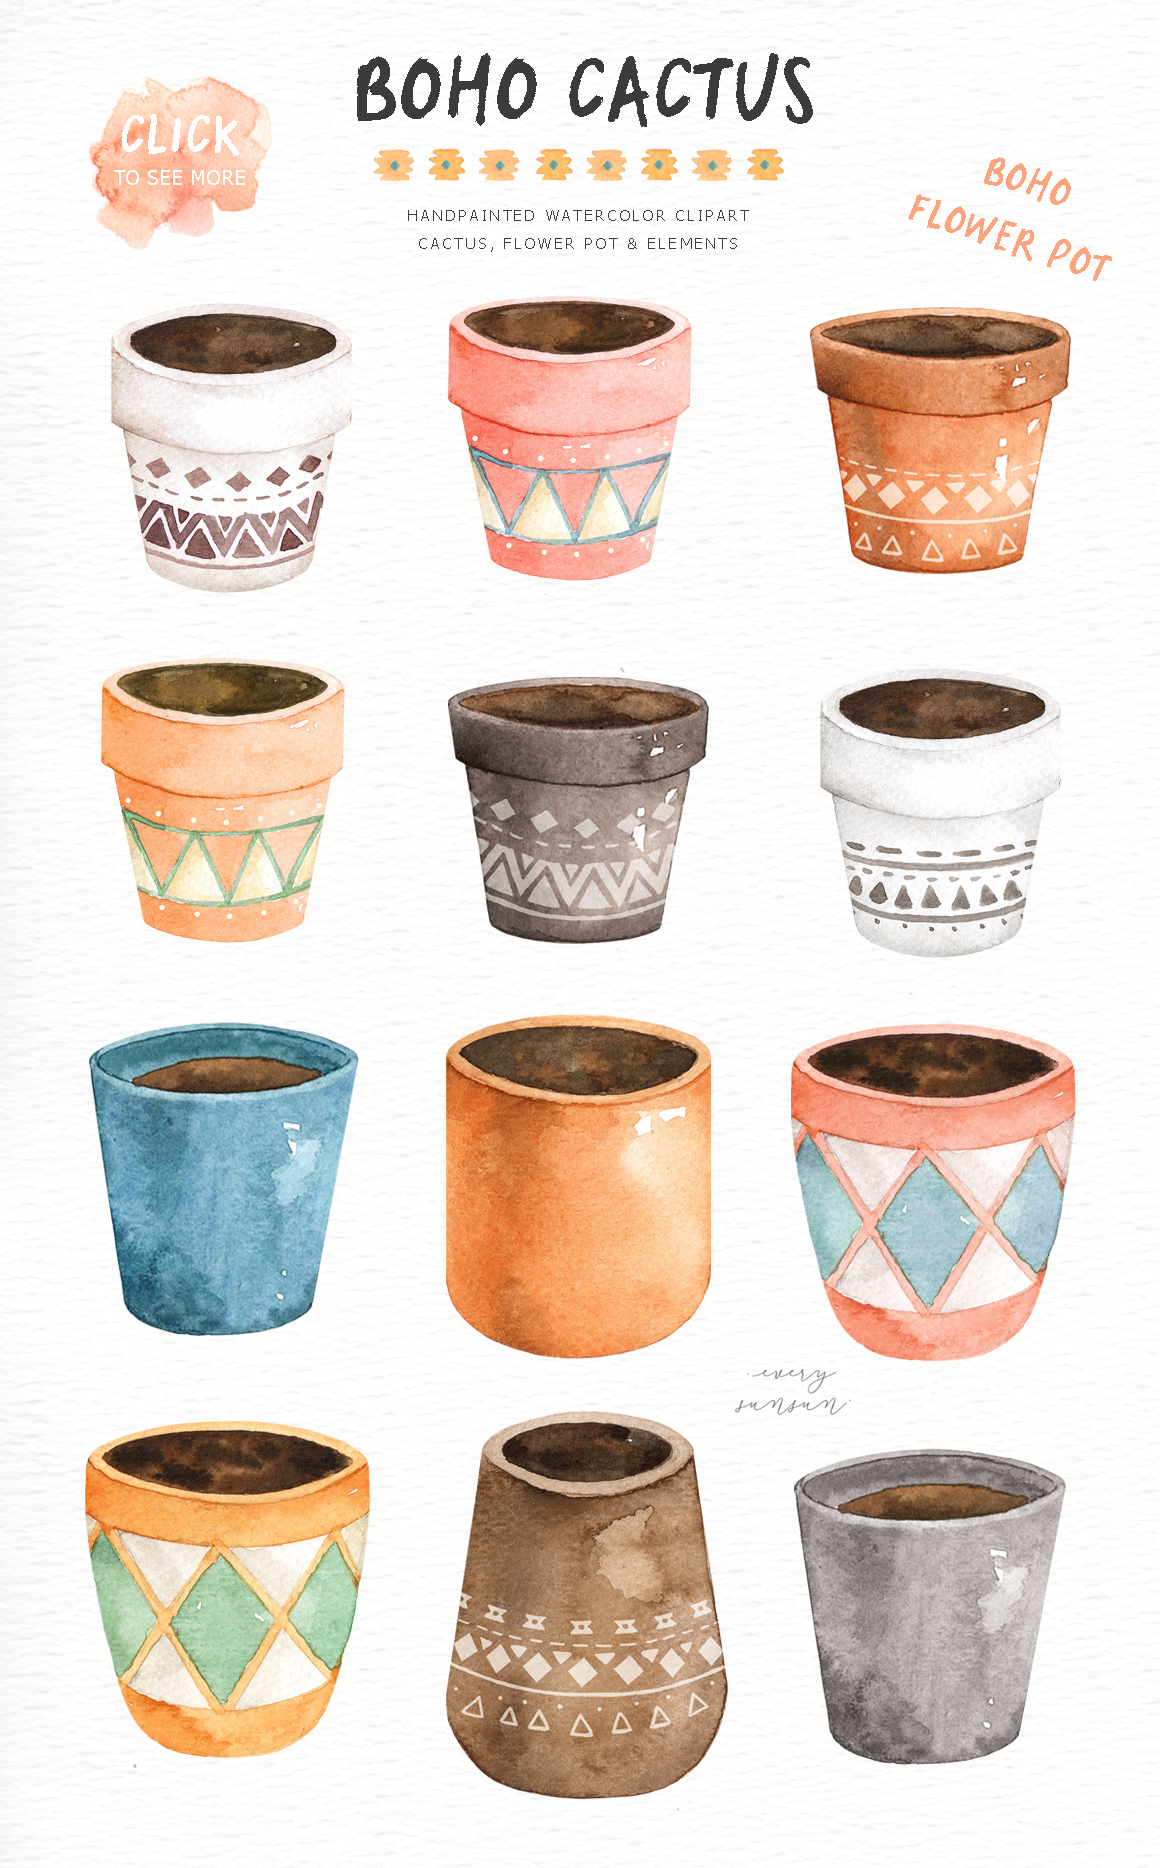 Clay Cooking Pots, 4.5 Terra Cotta, Clay Pots For Comoros